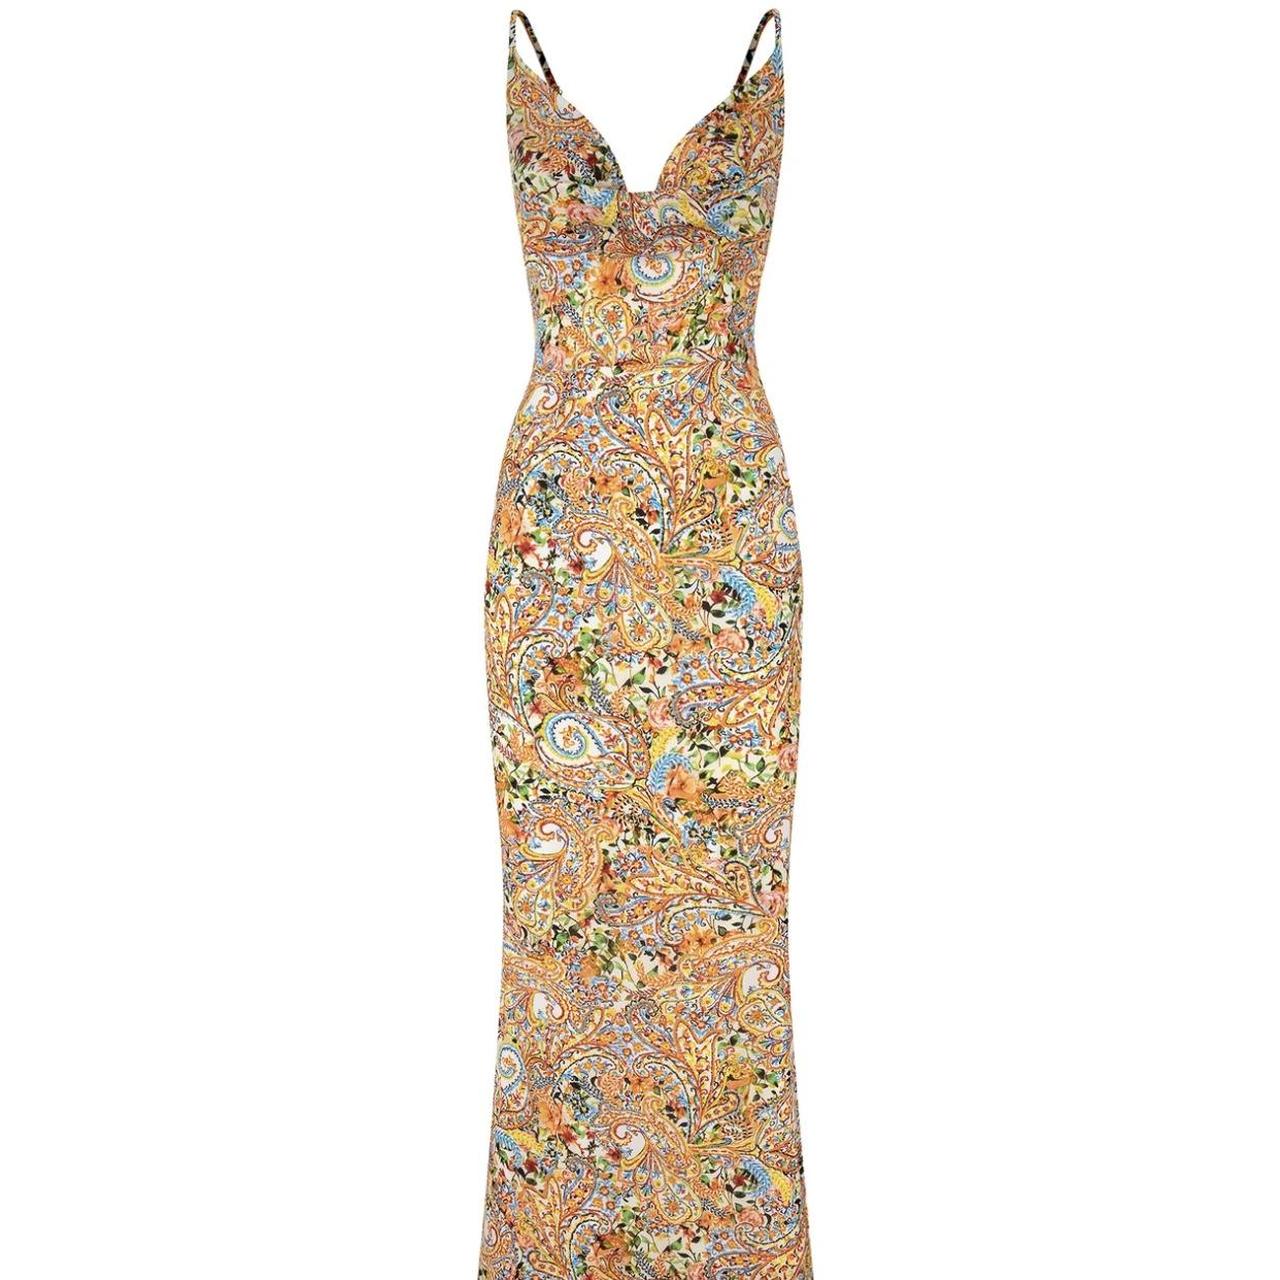 Millie Modelli #milliemodelli Picasso Dress Size... - Depop